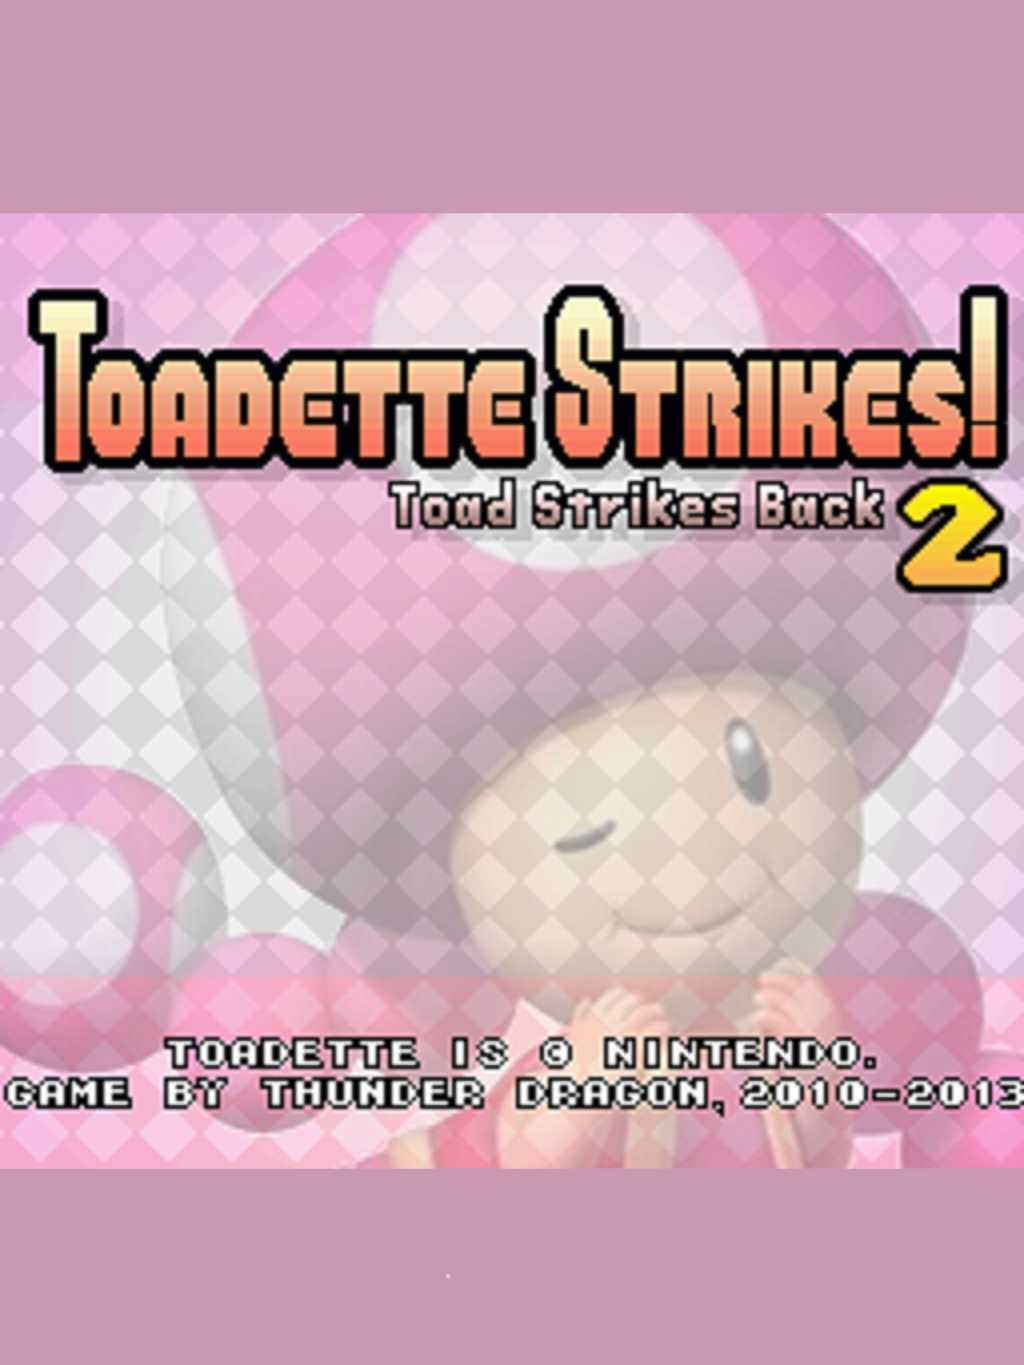 Toadette Strikes cover